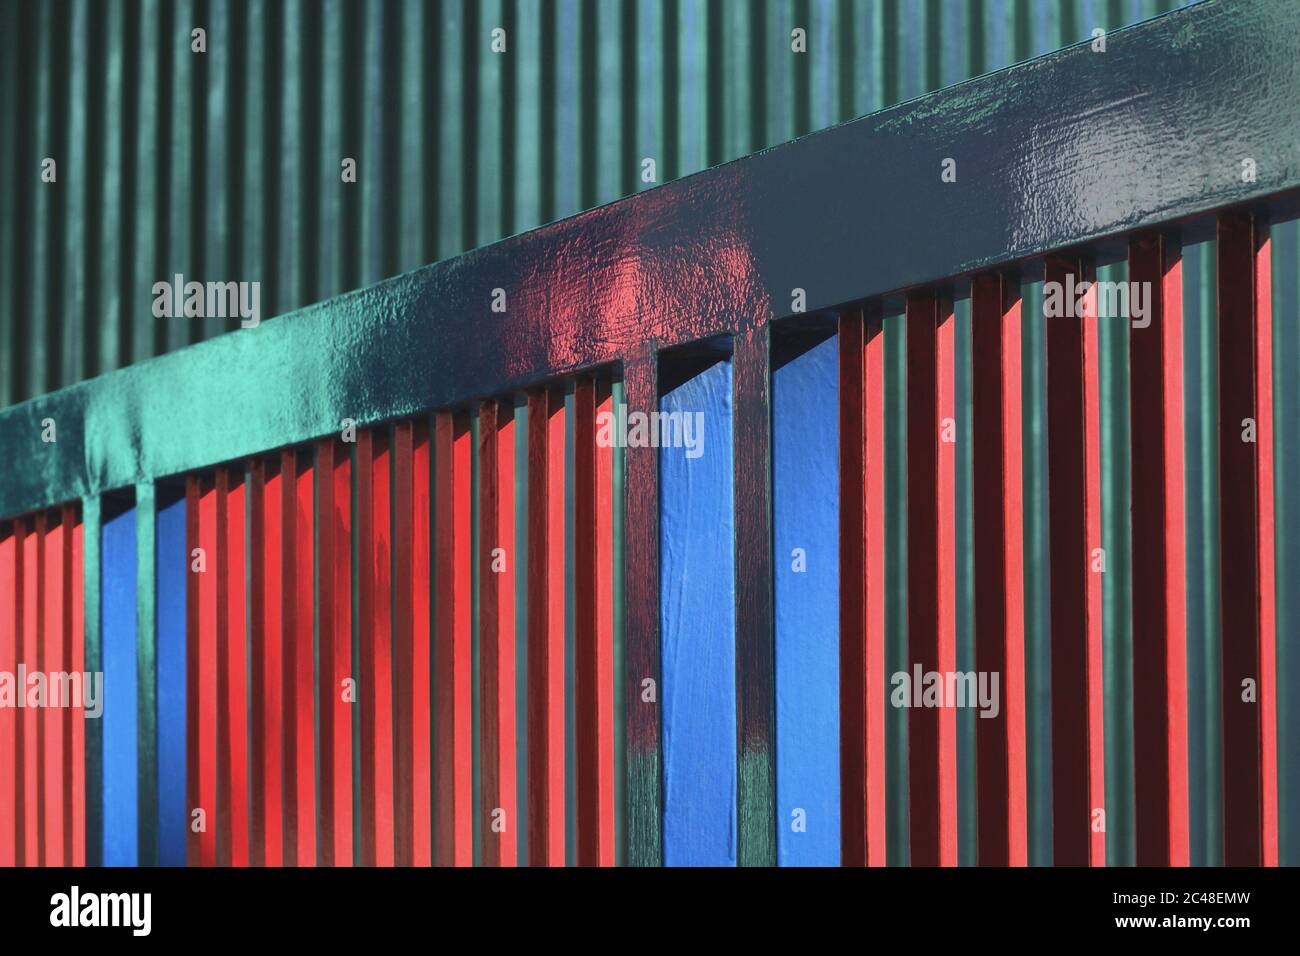 Abstract Minimalist Architecture,colorful iron railings Stock Photo